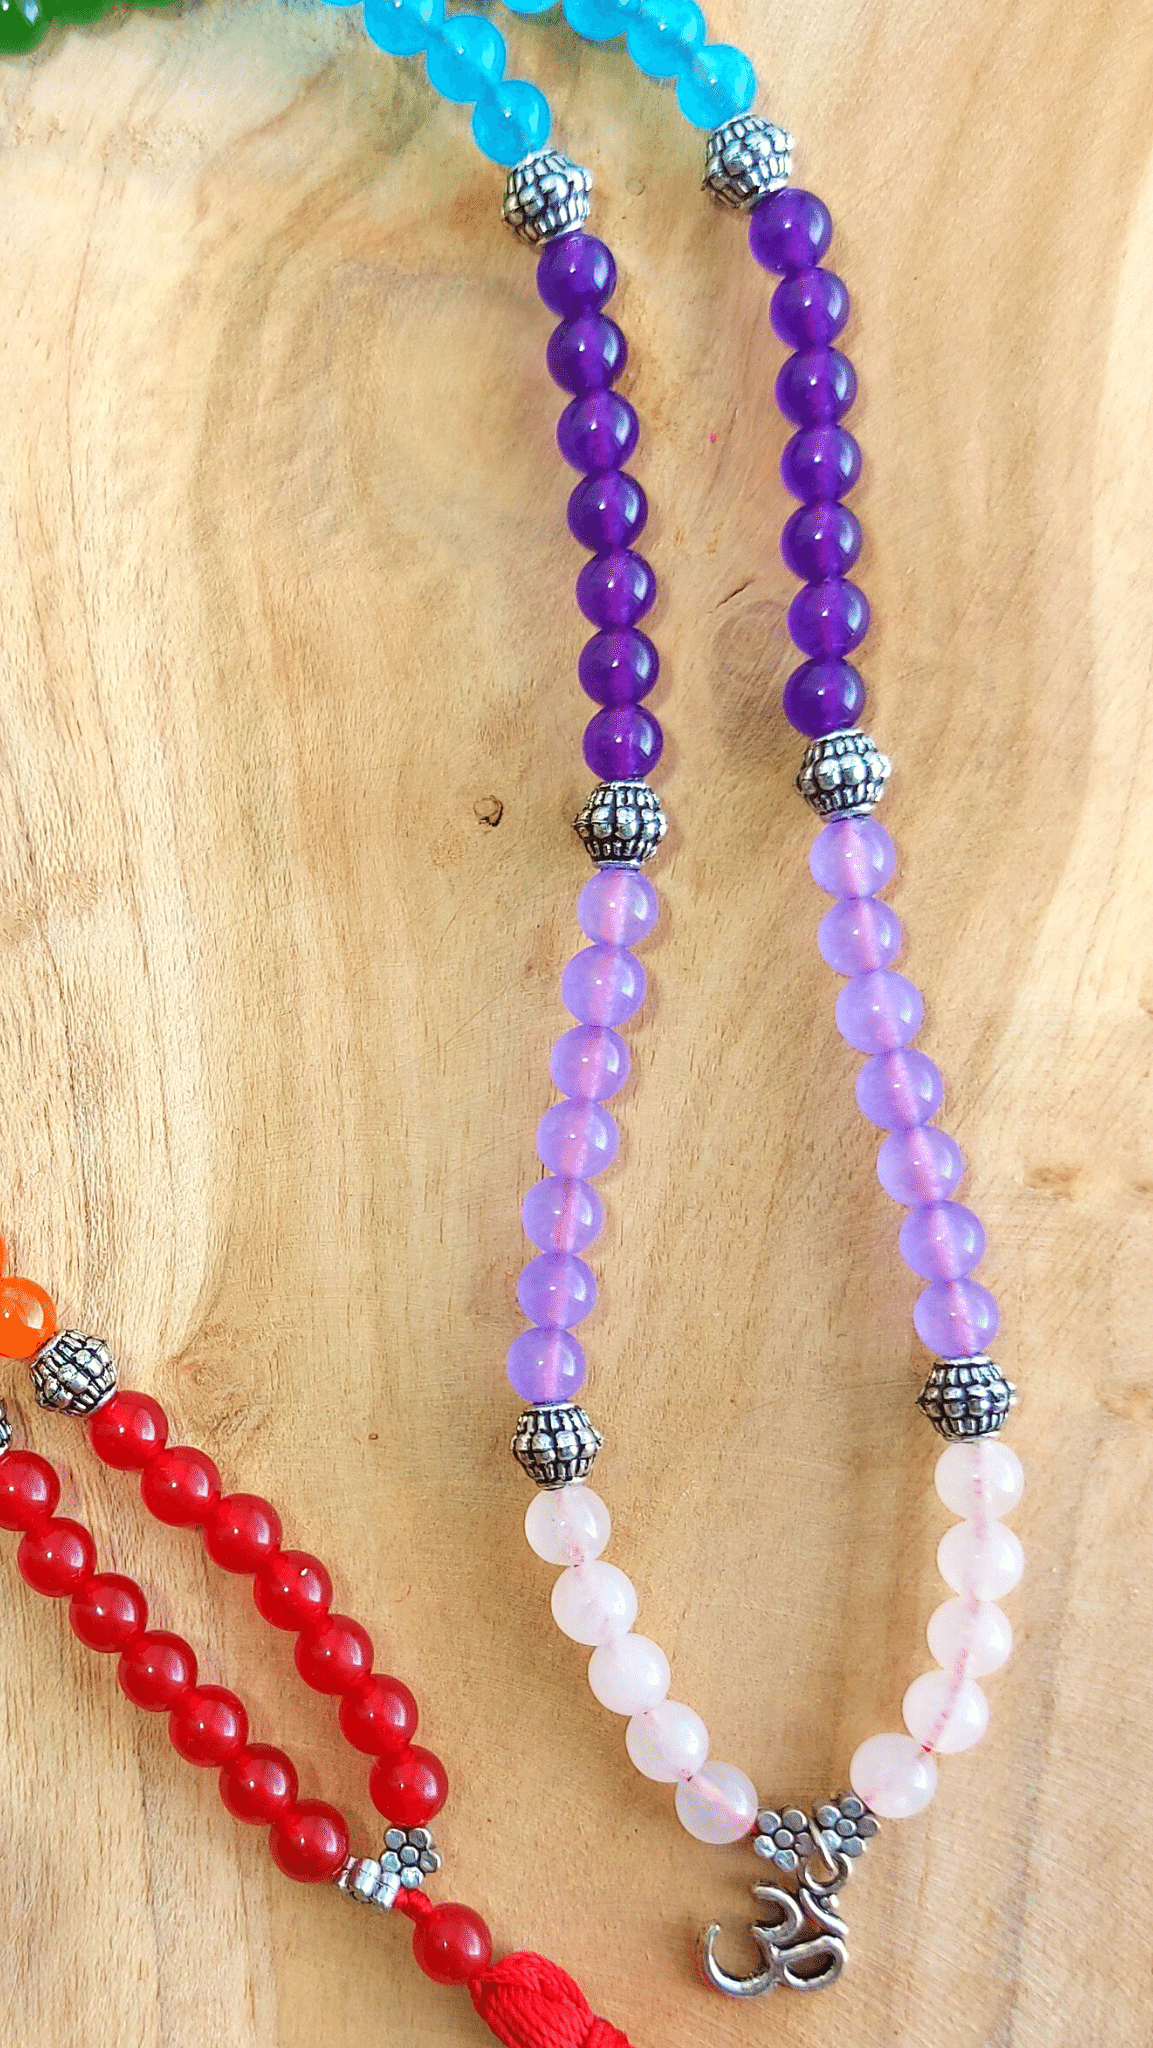 SEVEN CHAKRAS Short Mala Meditation Necklace with Jade in Chakra Colors